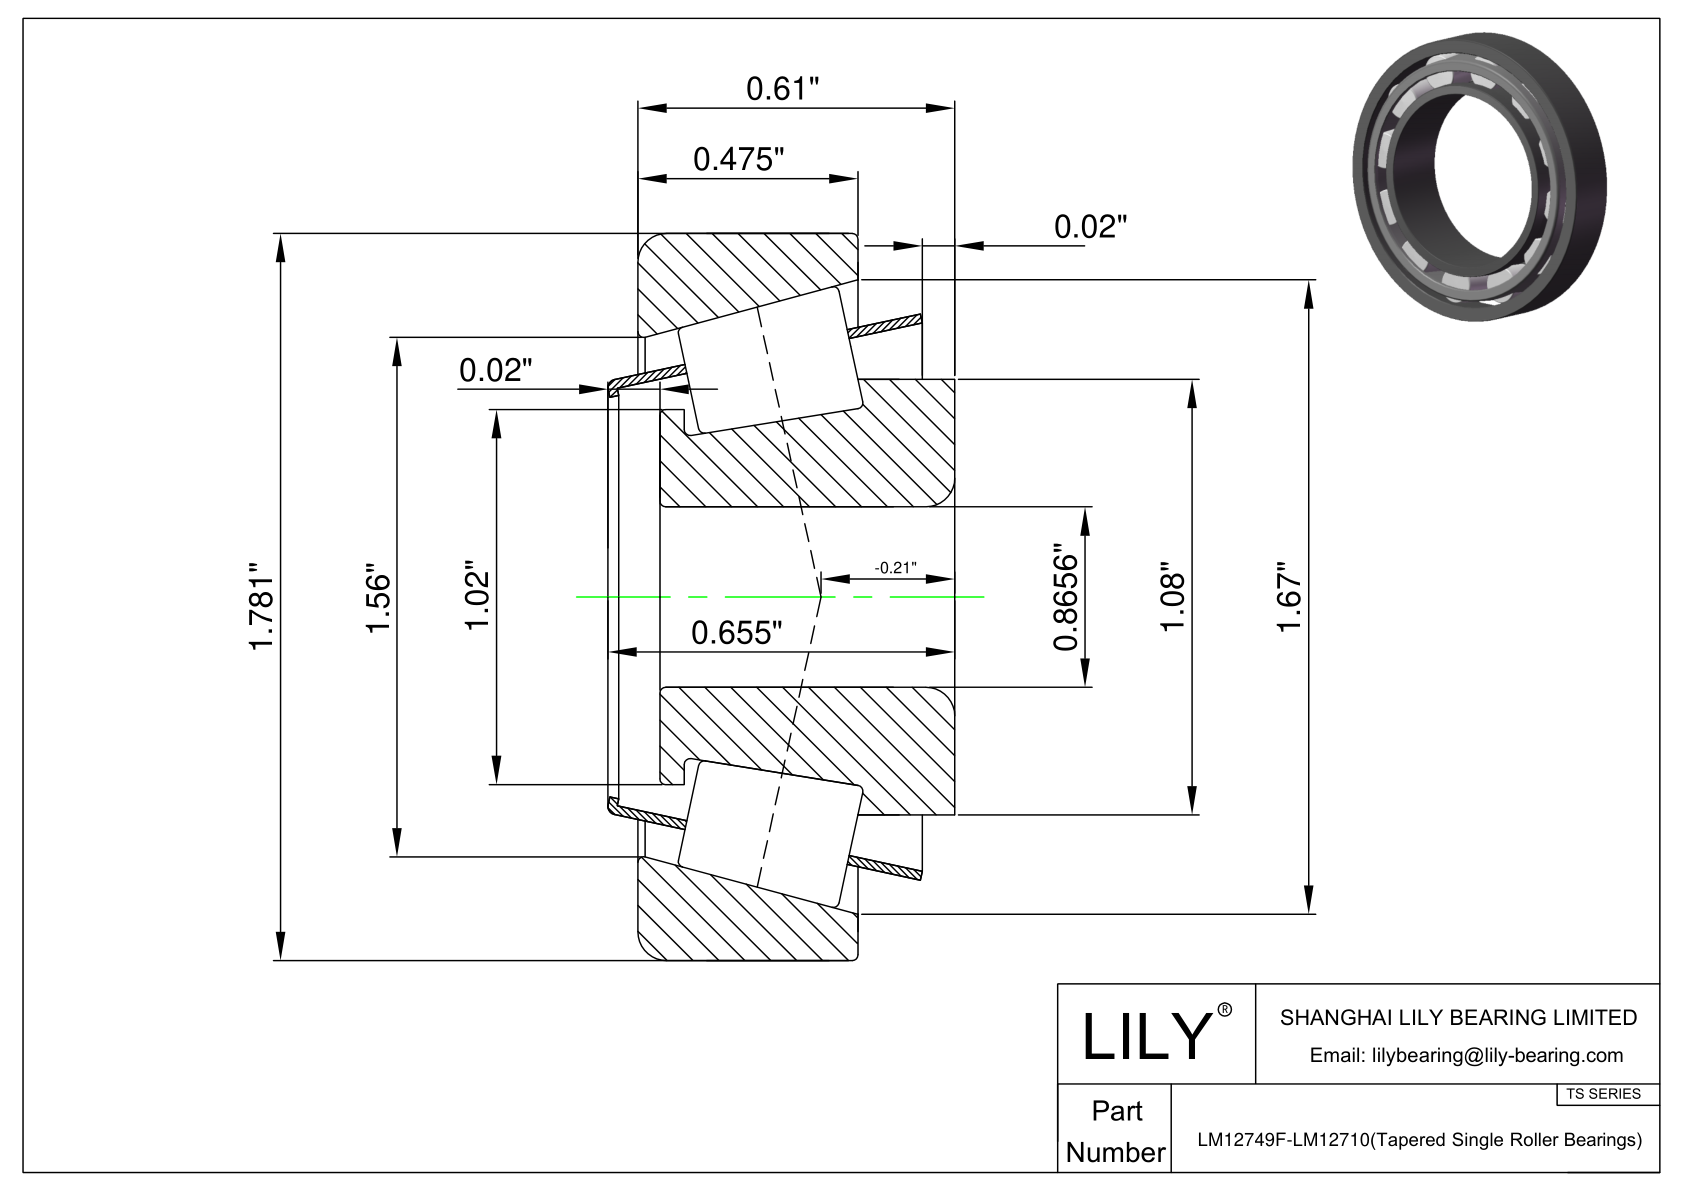 LM12749F-LM12710 TS系列(圆锥单滚子轴承)(英制) CAD图形